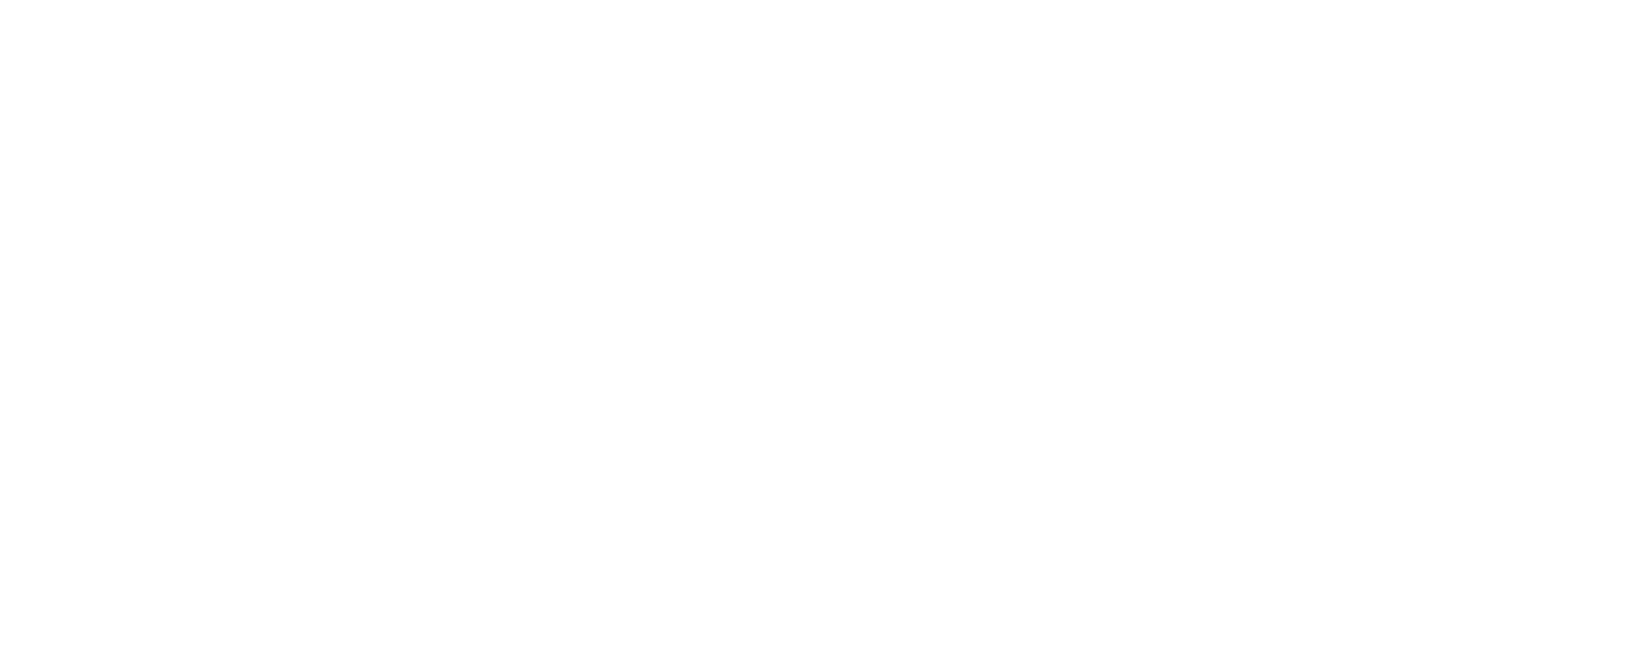 Hosting Solutions logo